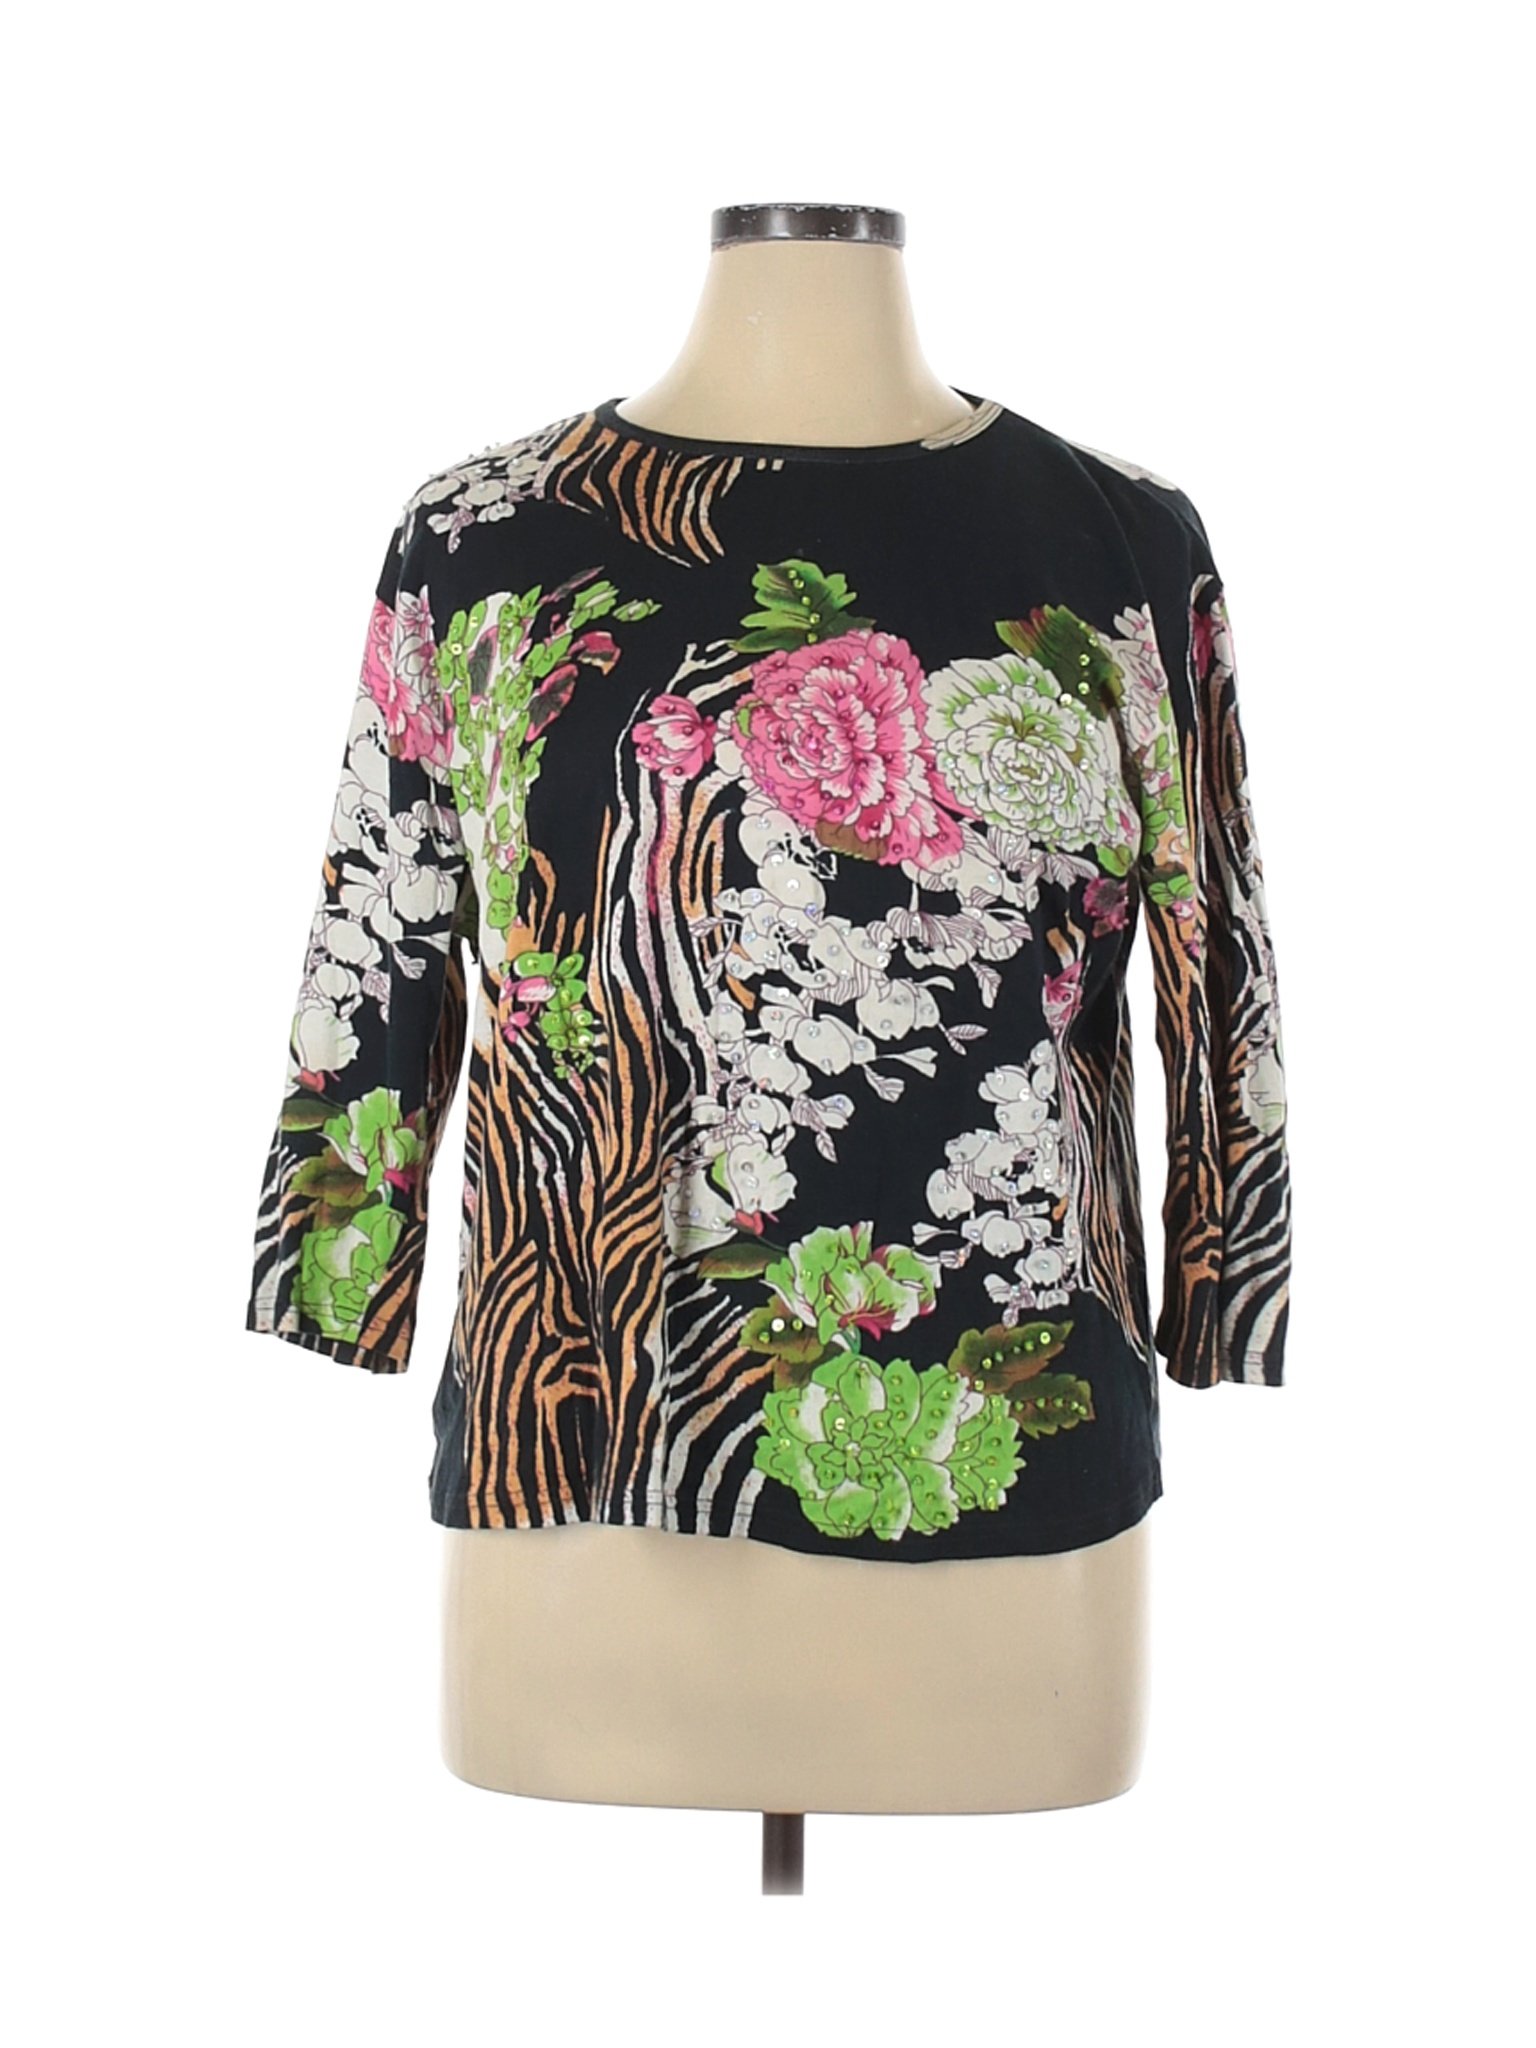 Take Two Clothing Co. Women Black 3/4 Sleeve T-Shirt 1X Plus | eBay